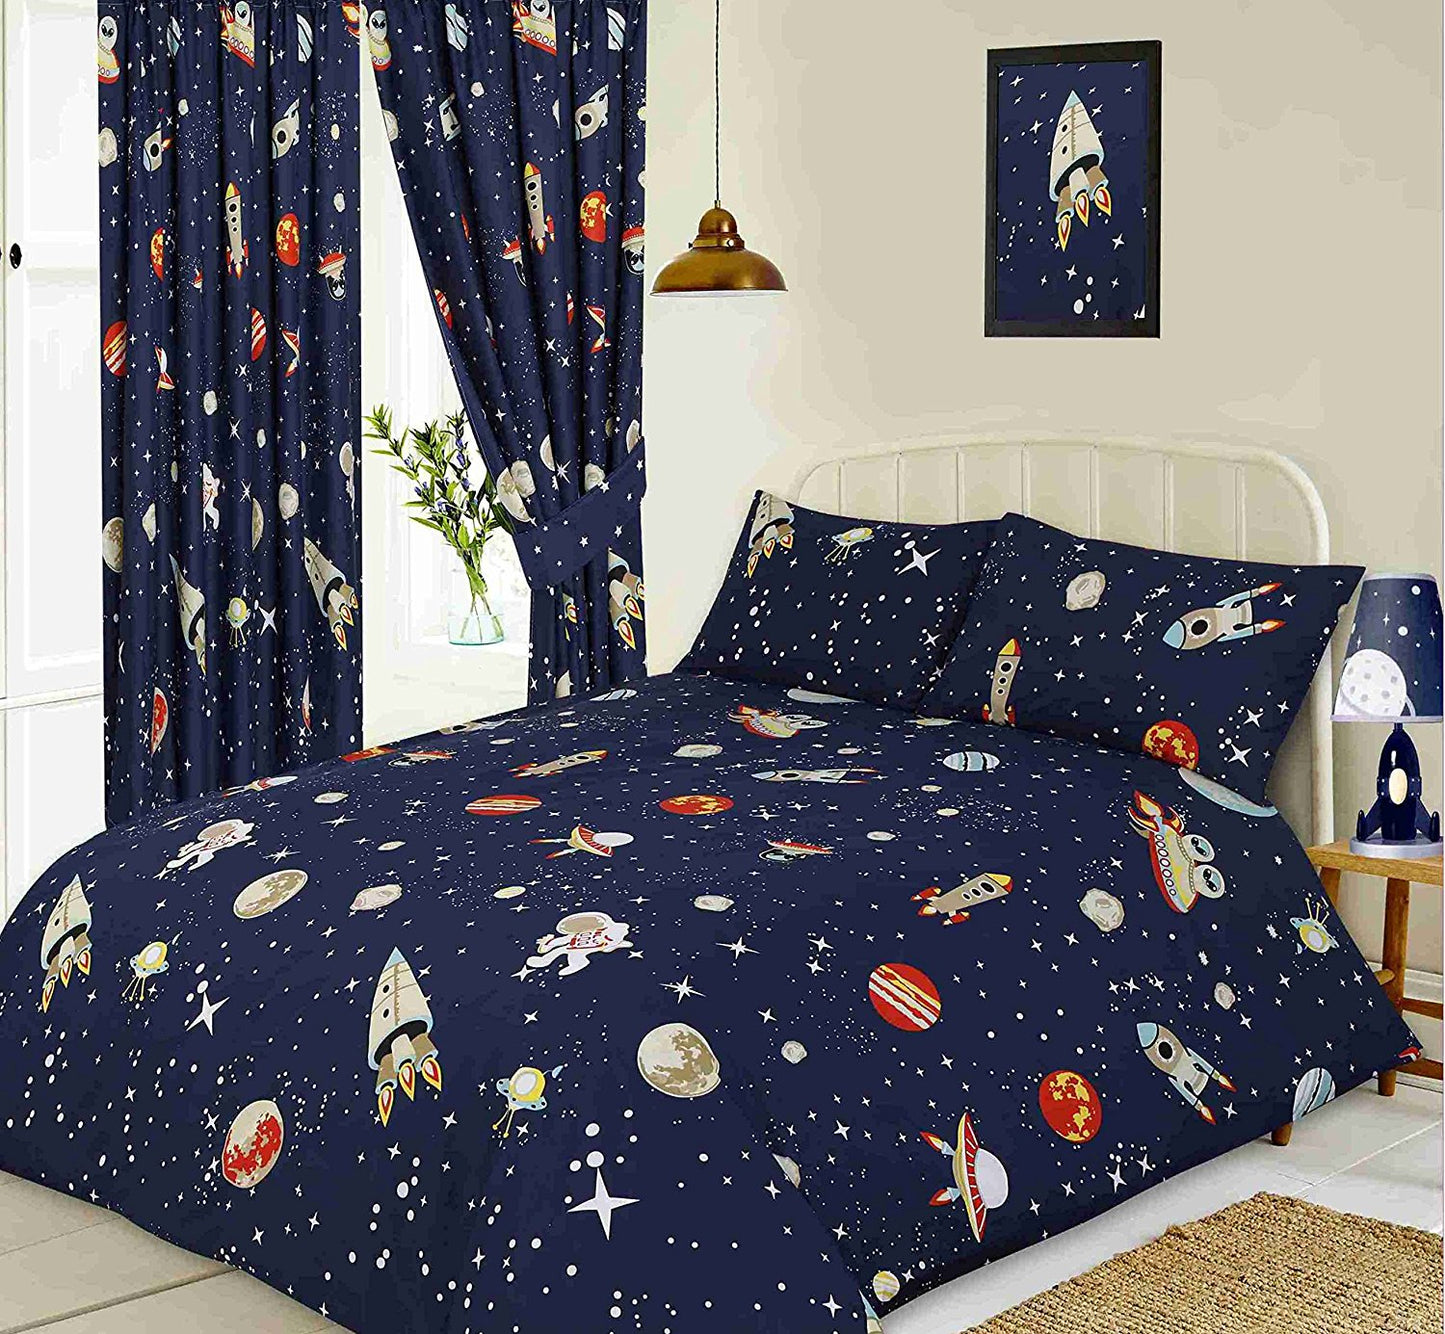 Double Bed Space Duvet Cover Set Stars Navy Planets Alien Astronaut UFO